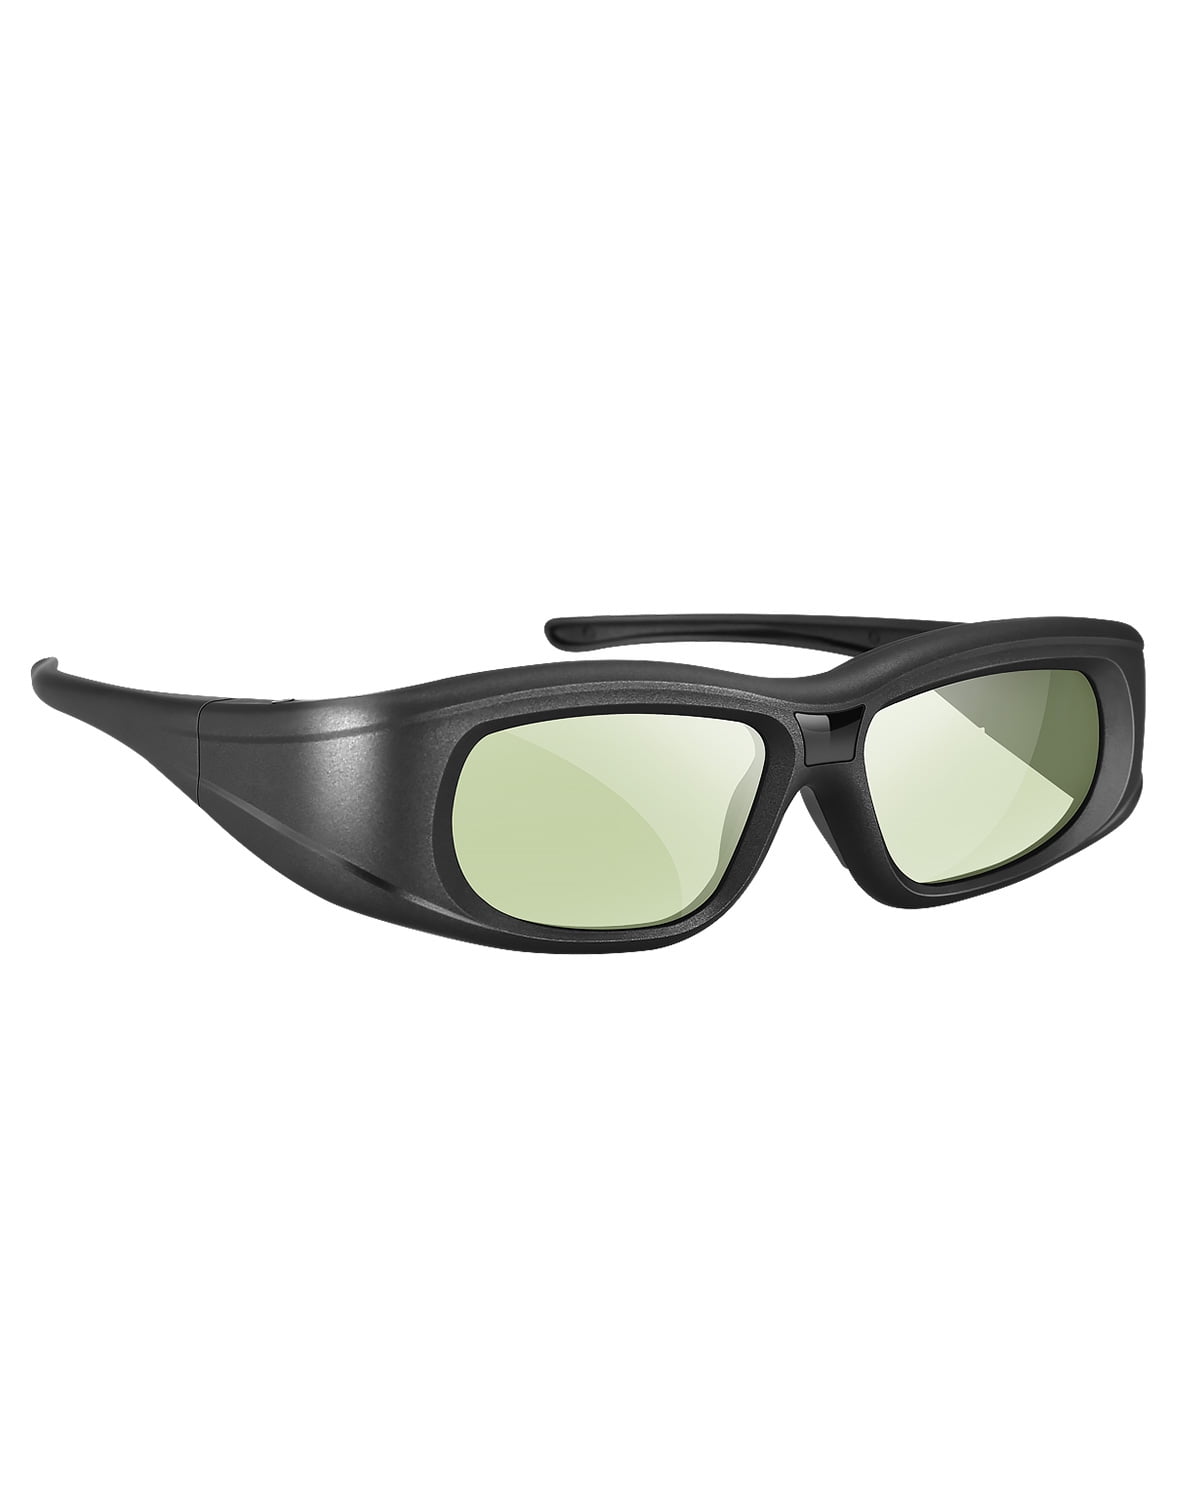 sony bluetooth sunglasses